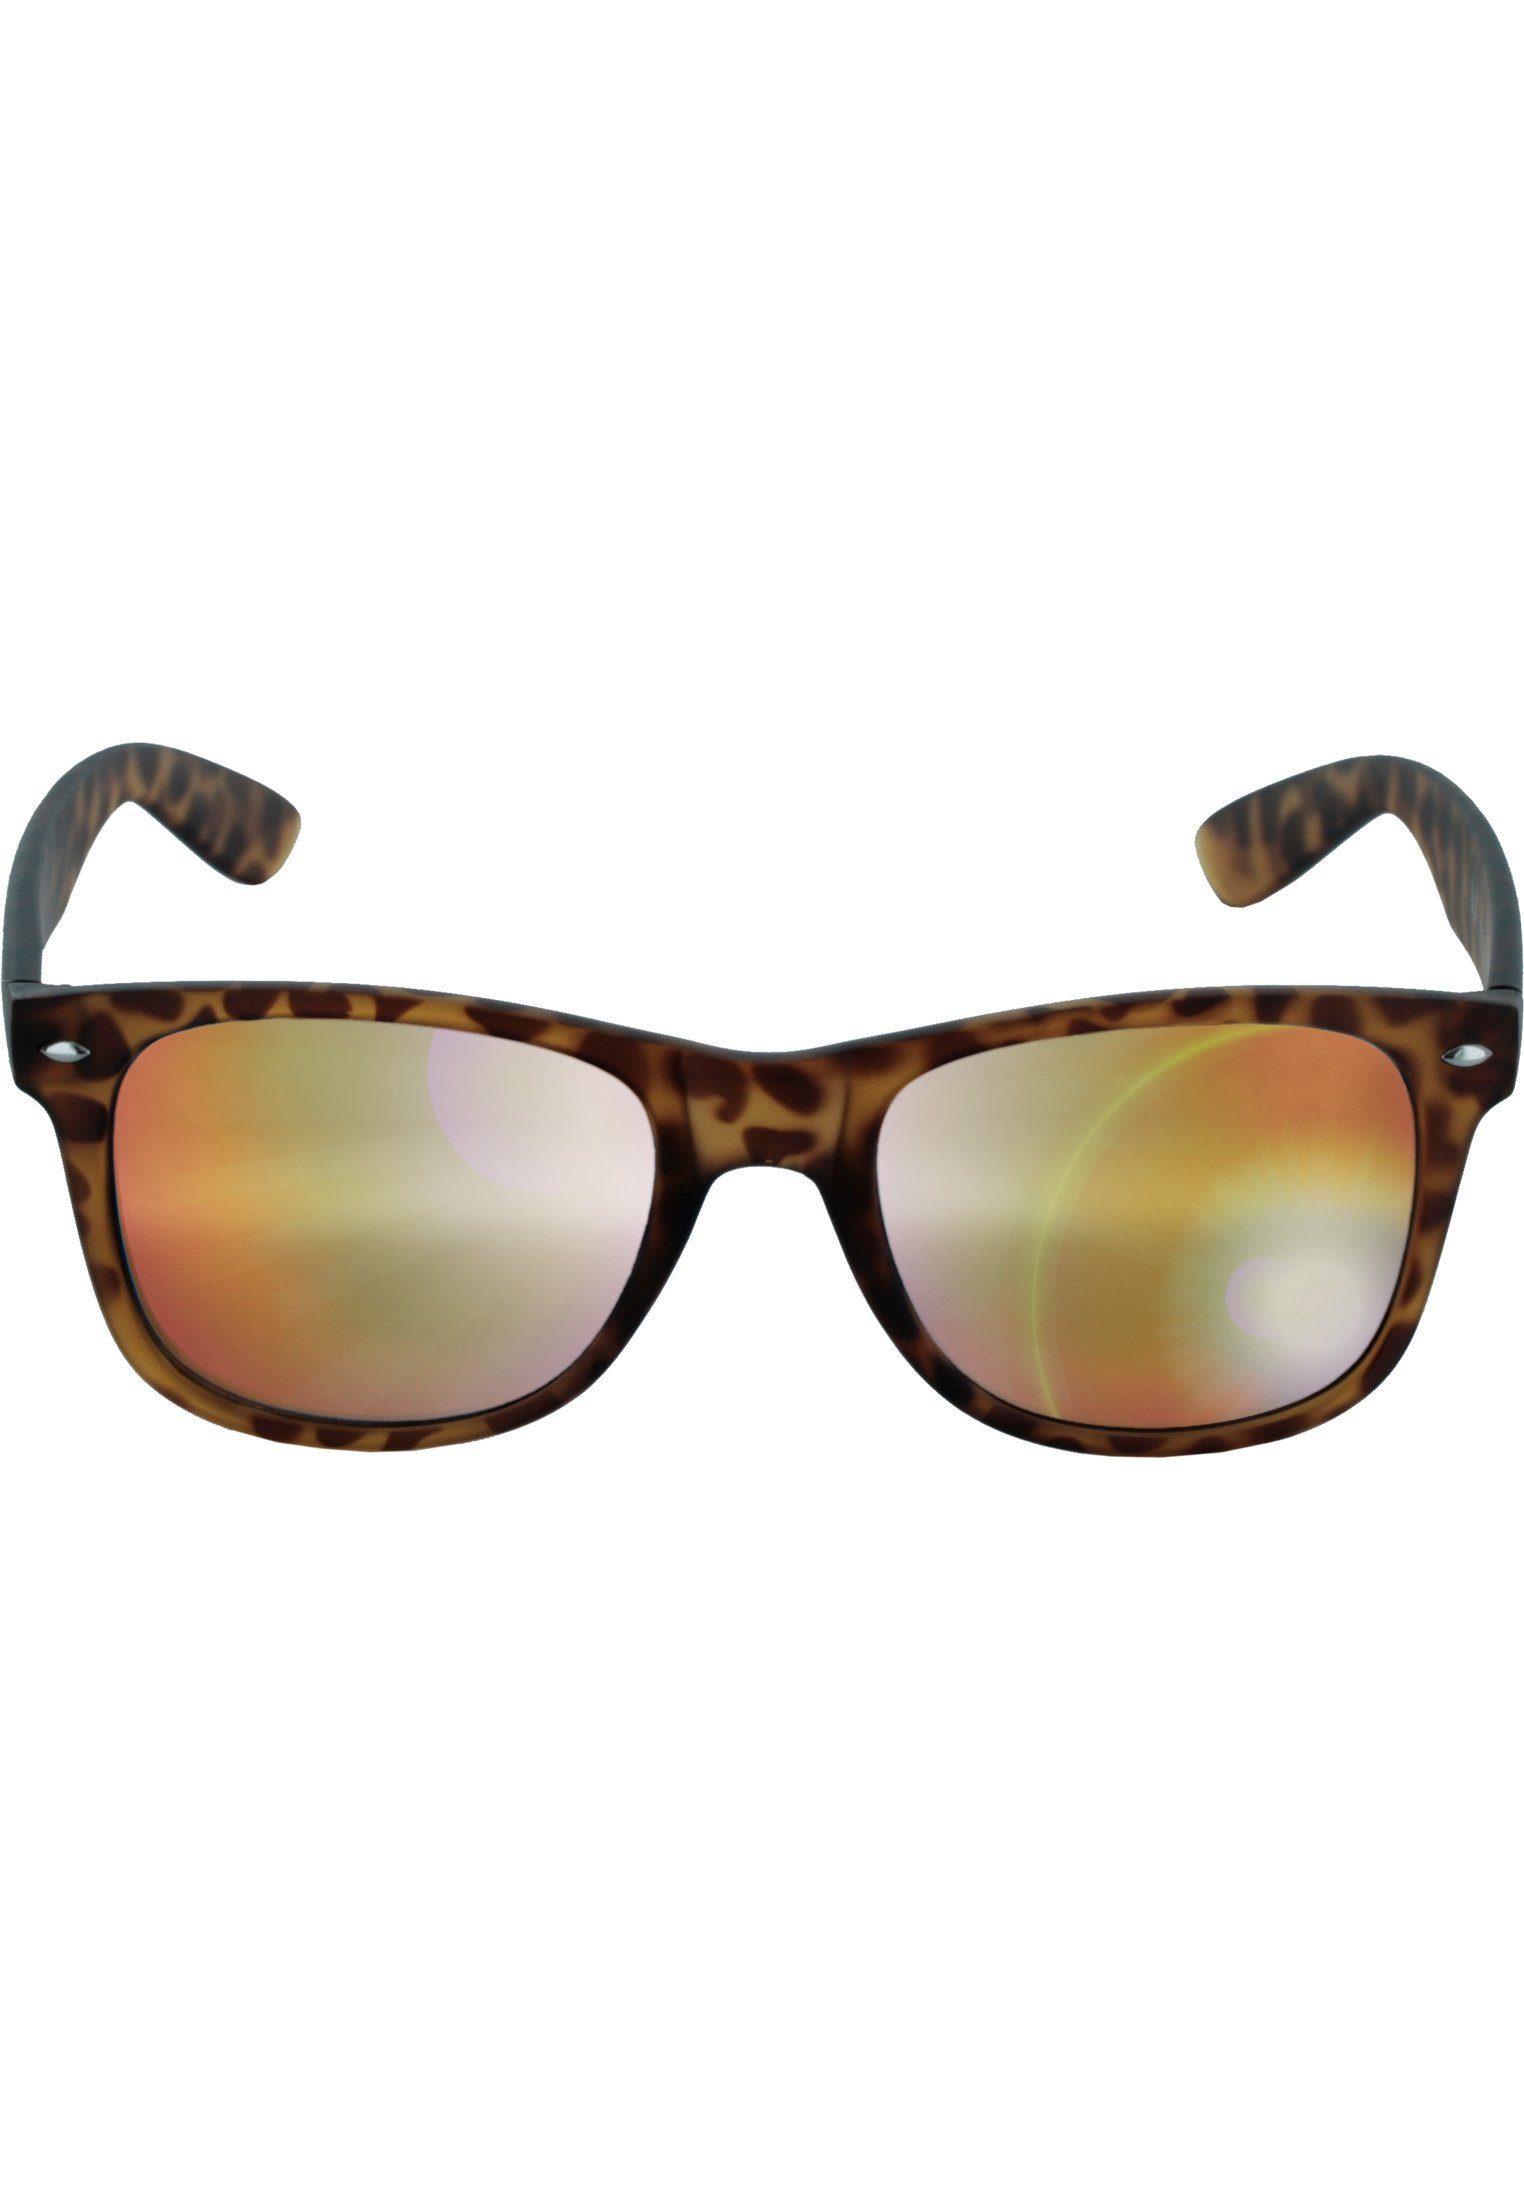 MSTRDS Sonnenbrille Accessoires Sunglasses Likoma Mirror amber/orange | Sonnenbrillen